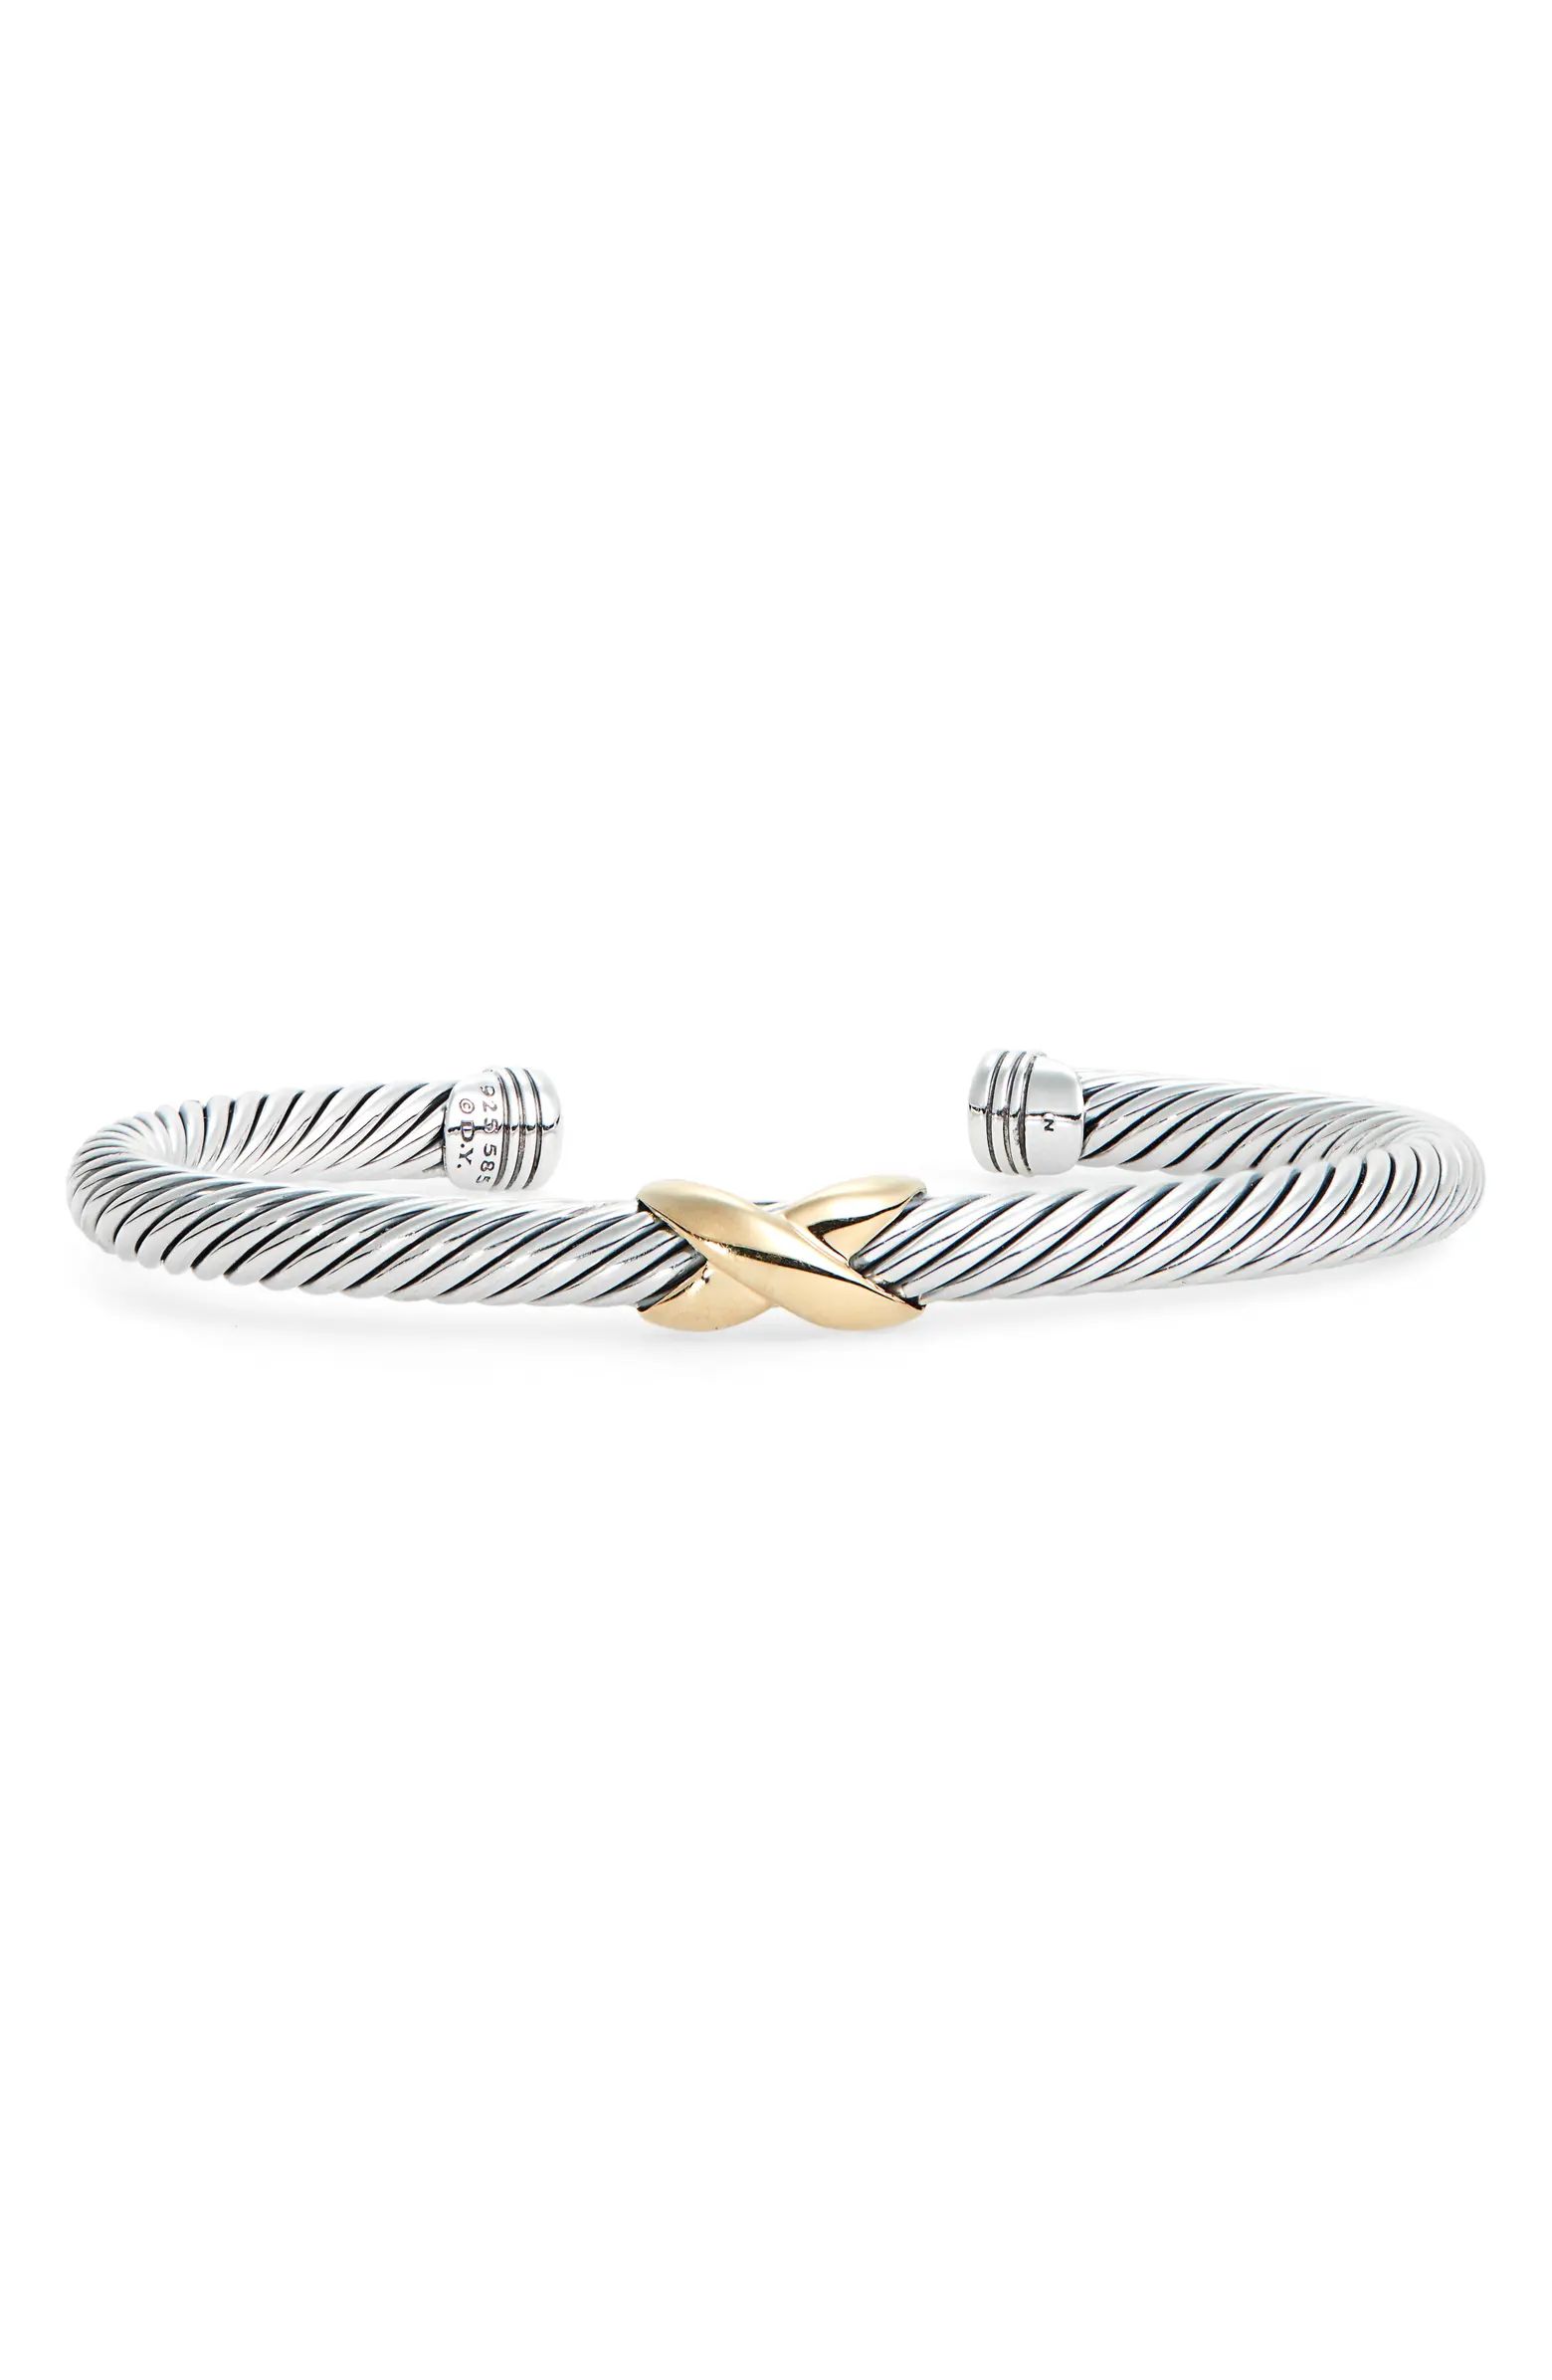 David Yurman X Bracelet with Gold | Nordstrom | Nordstrom